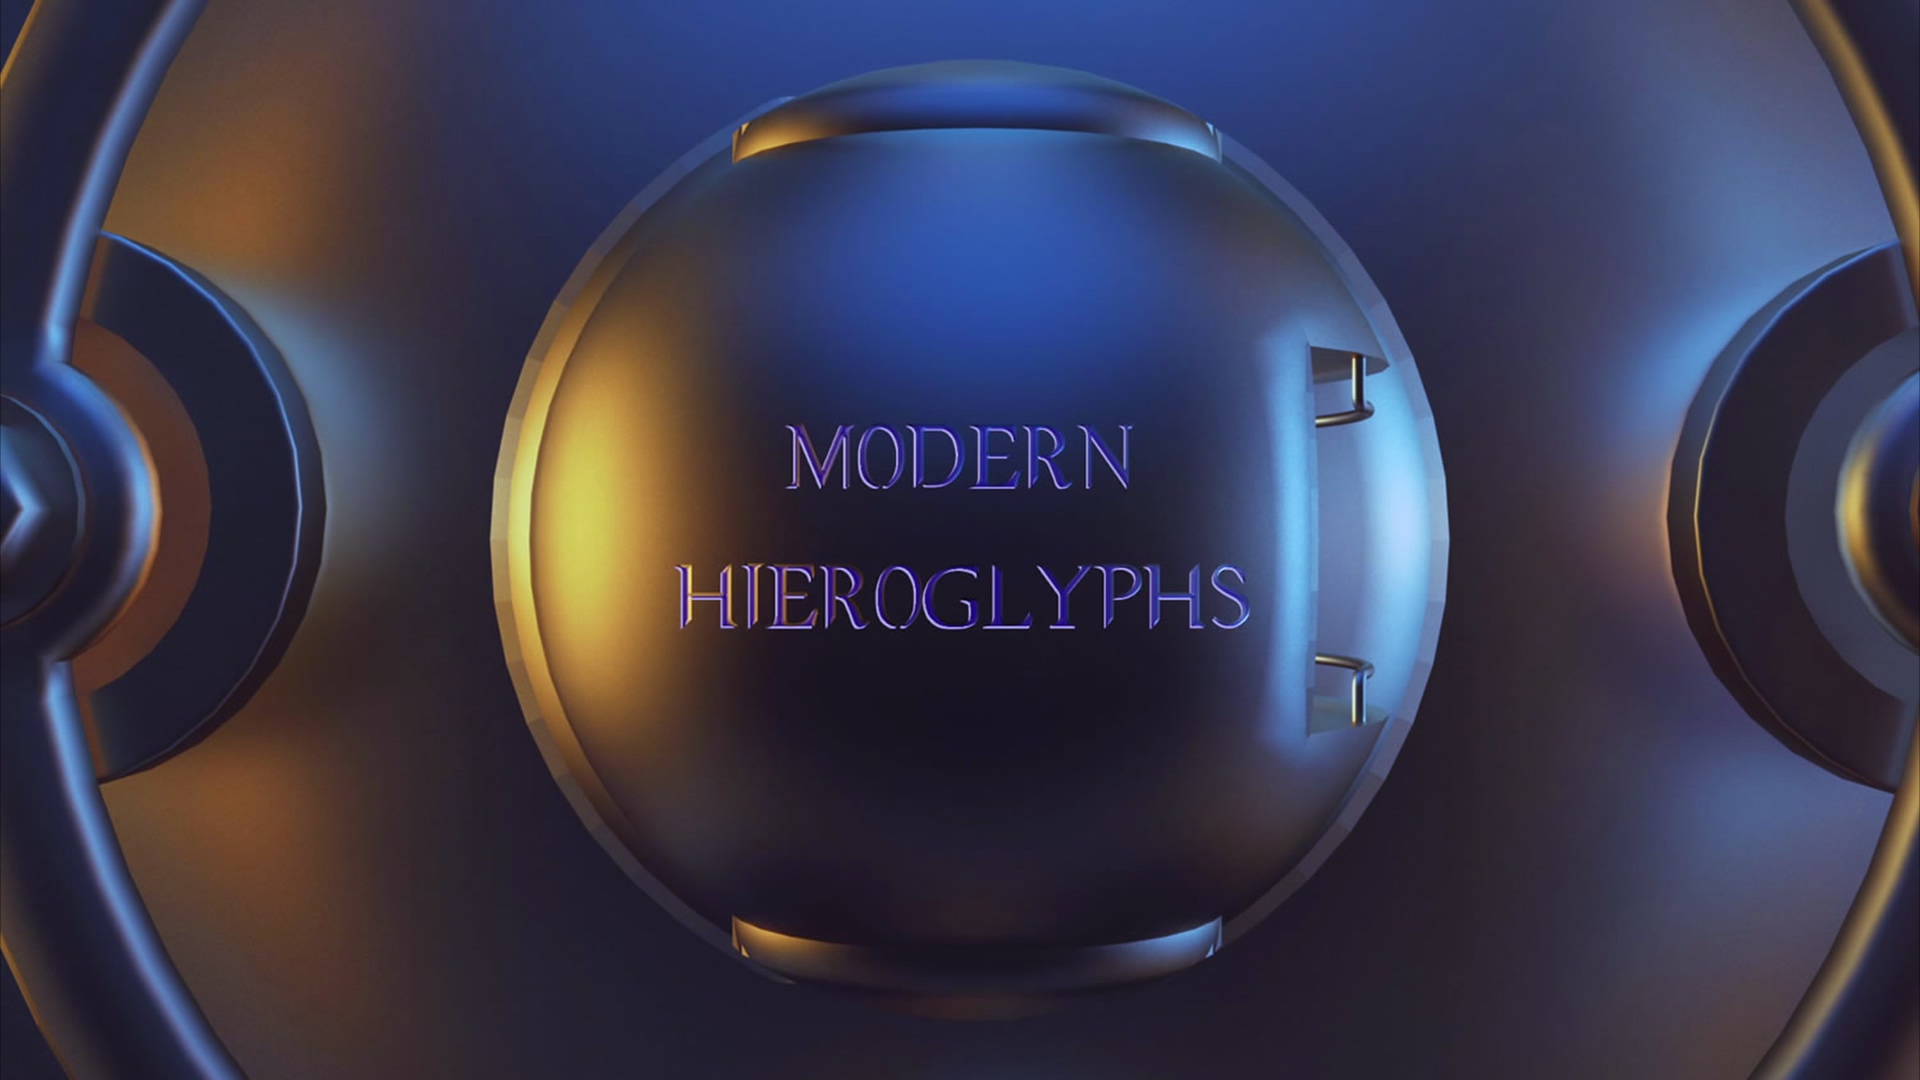 ModernHieroglyphsLogo